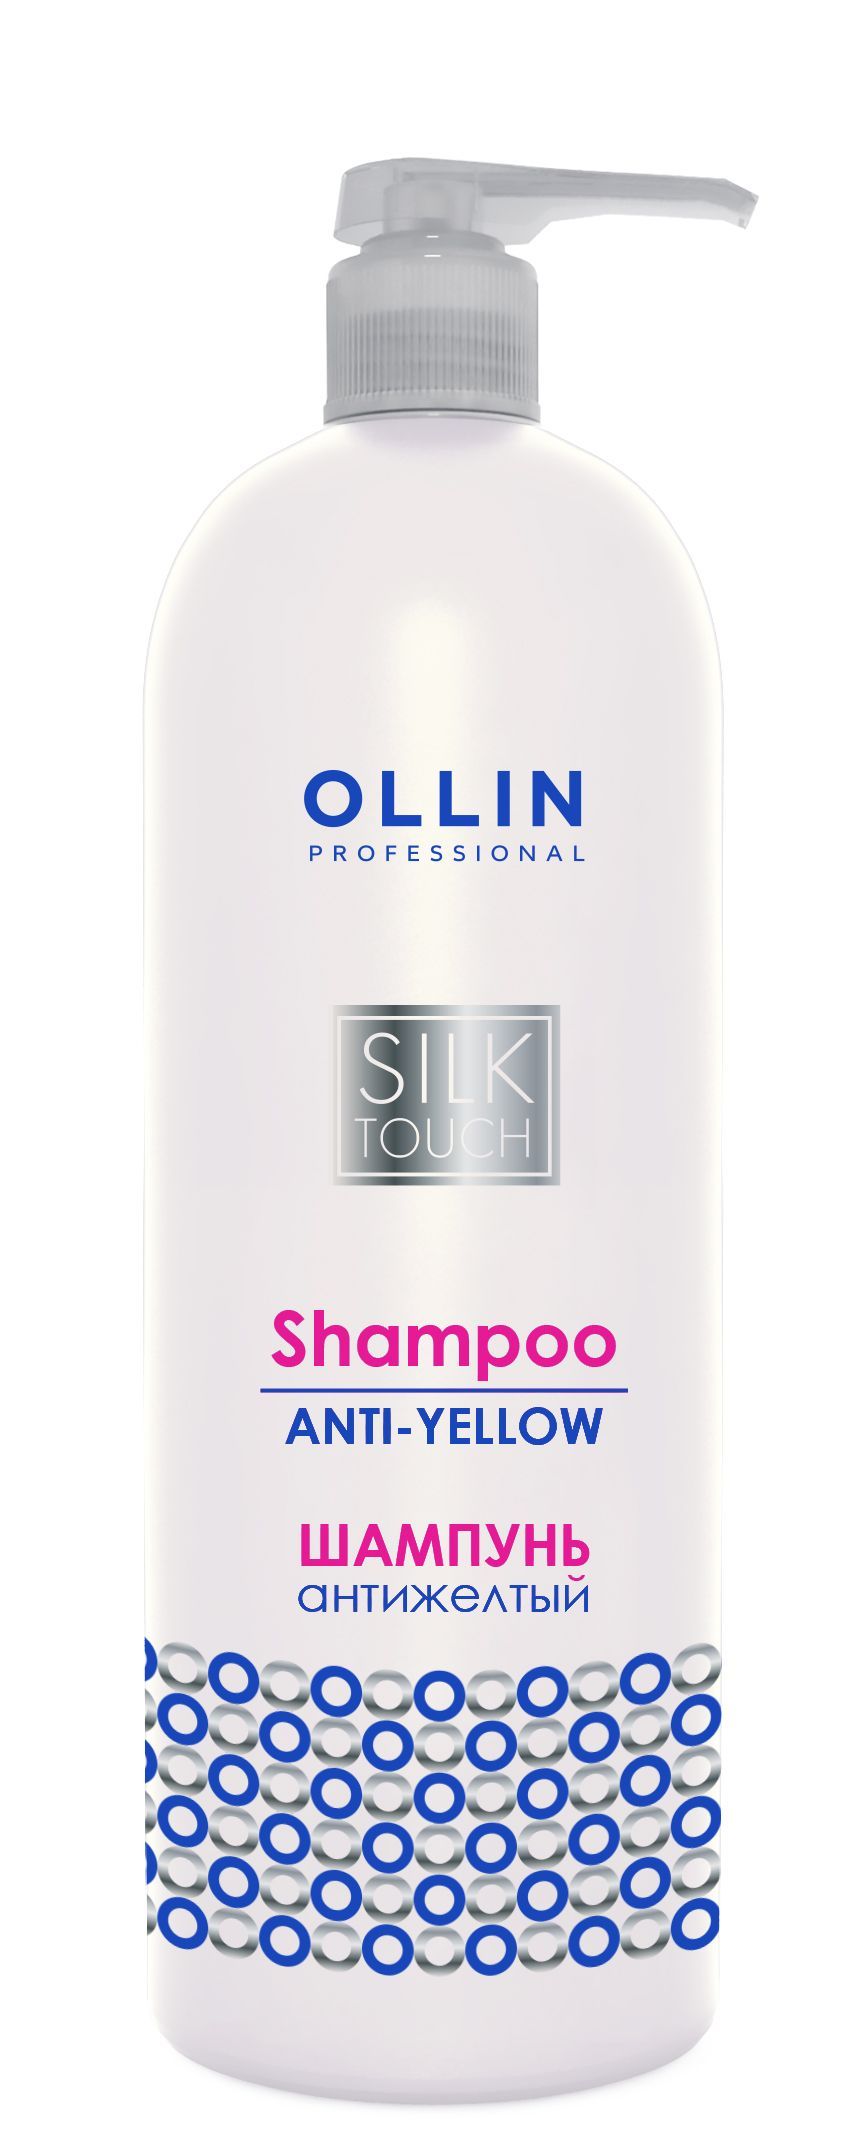 Ollin, Шампунь для волос «Антижелтый» серии «Silk Touch», Фото интернет-магазин Премиум-Косметика.РФ